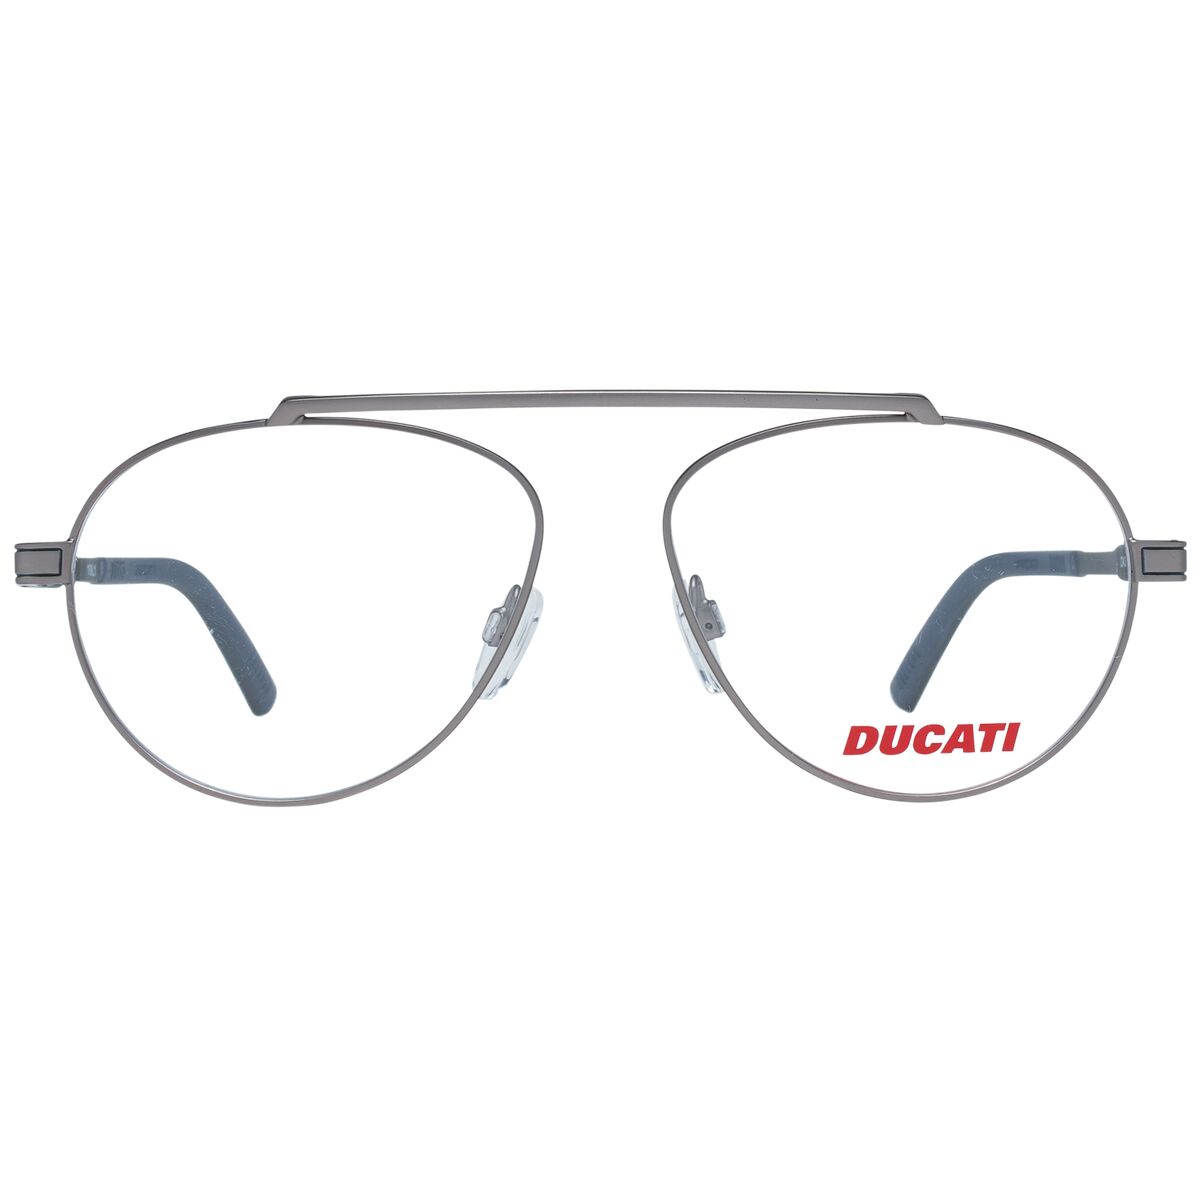 Kaufe Brillenfassung Ducati DA3029 57968 bei AWK Flagship um € 67.00